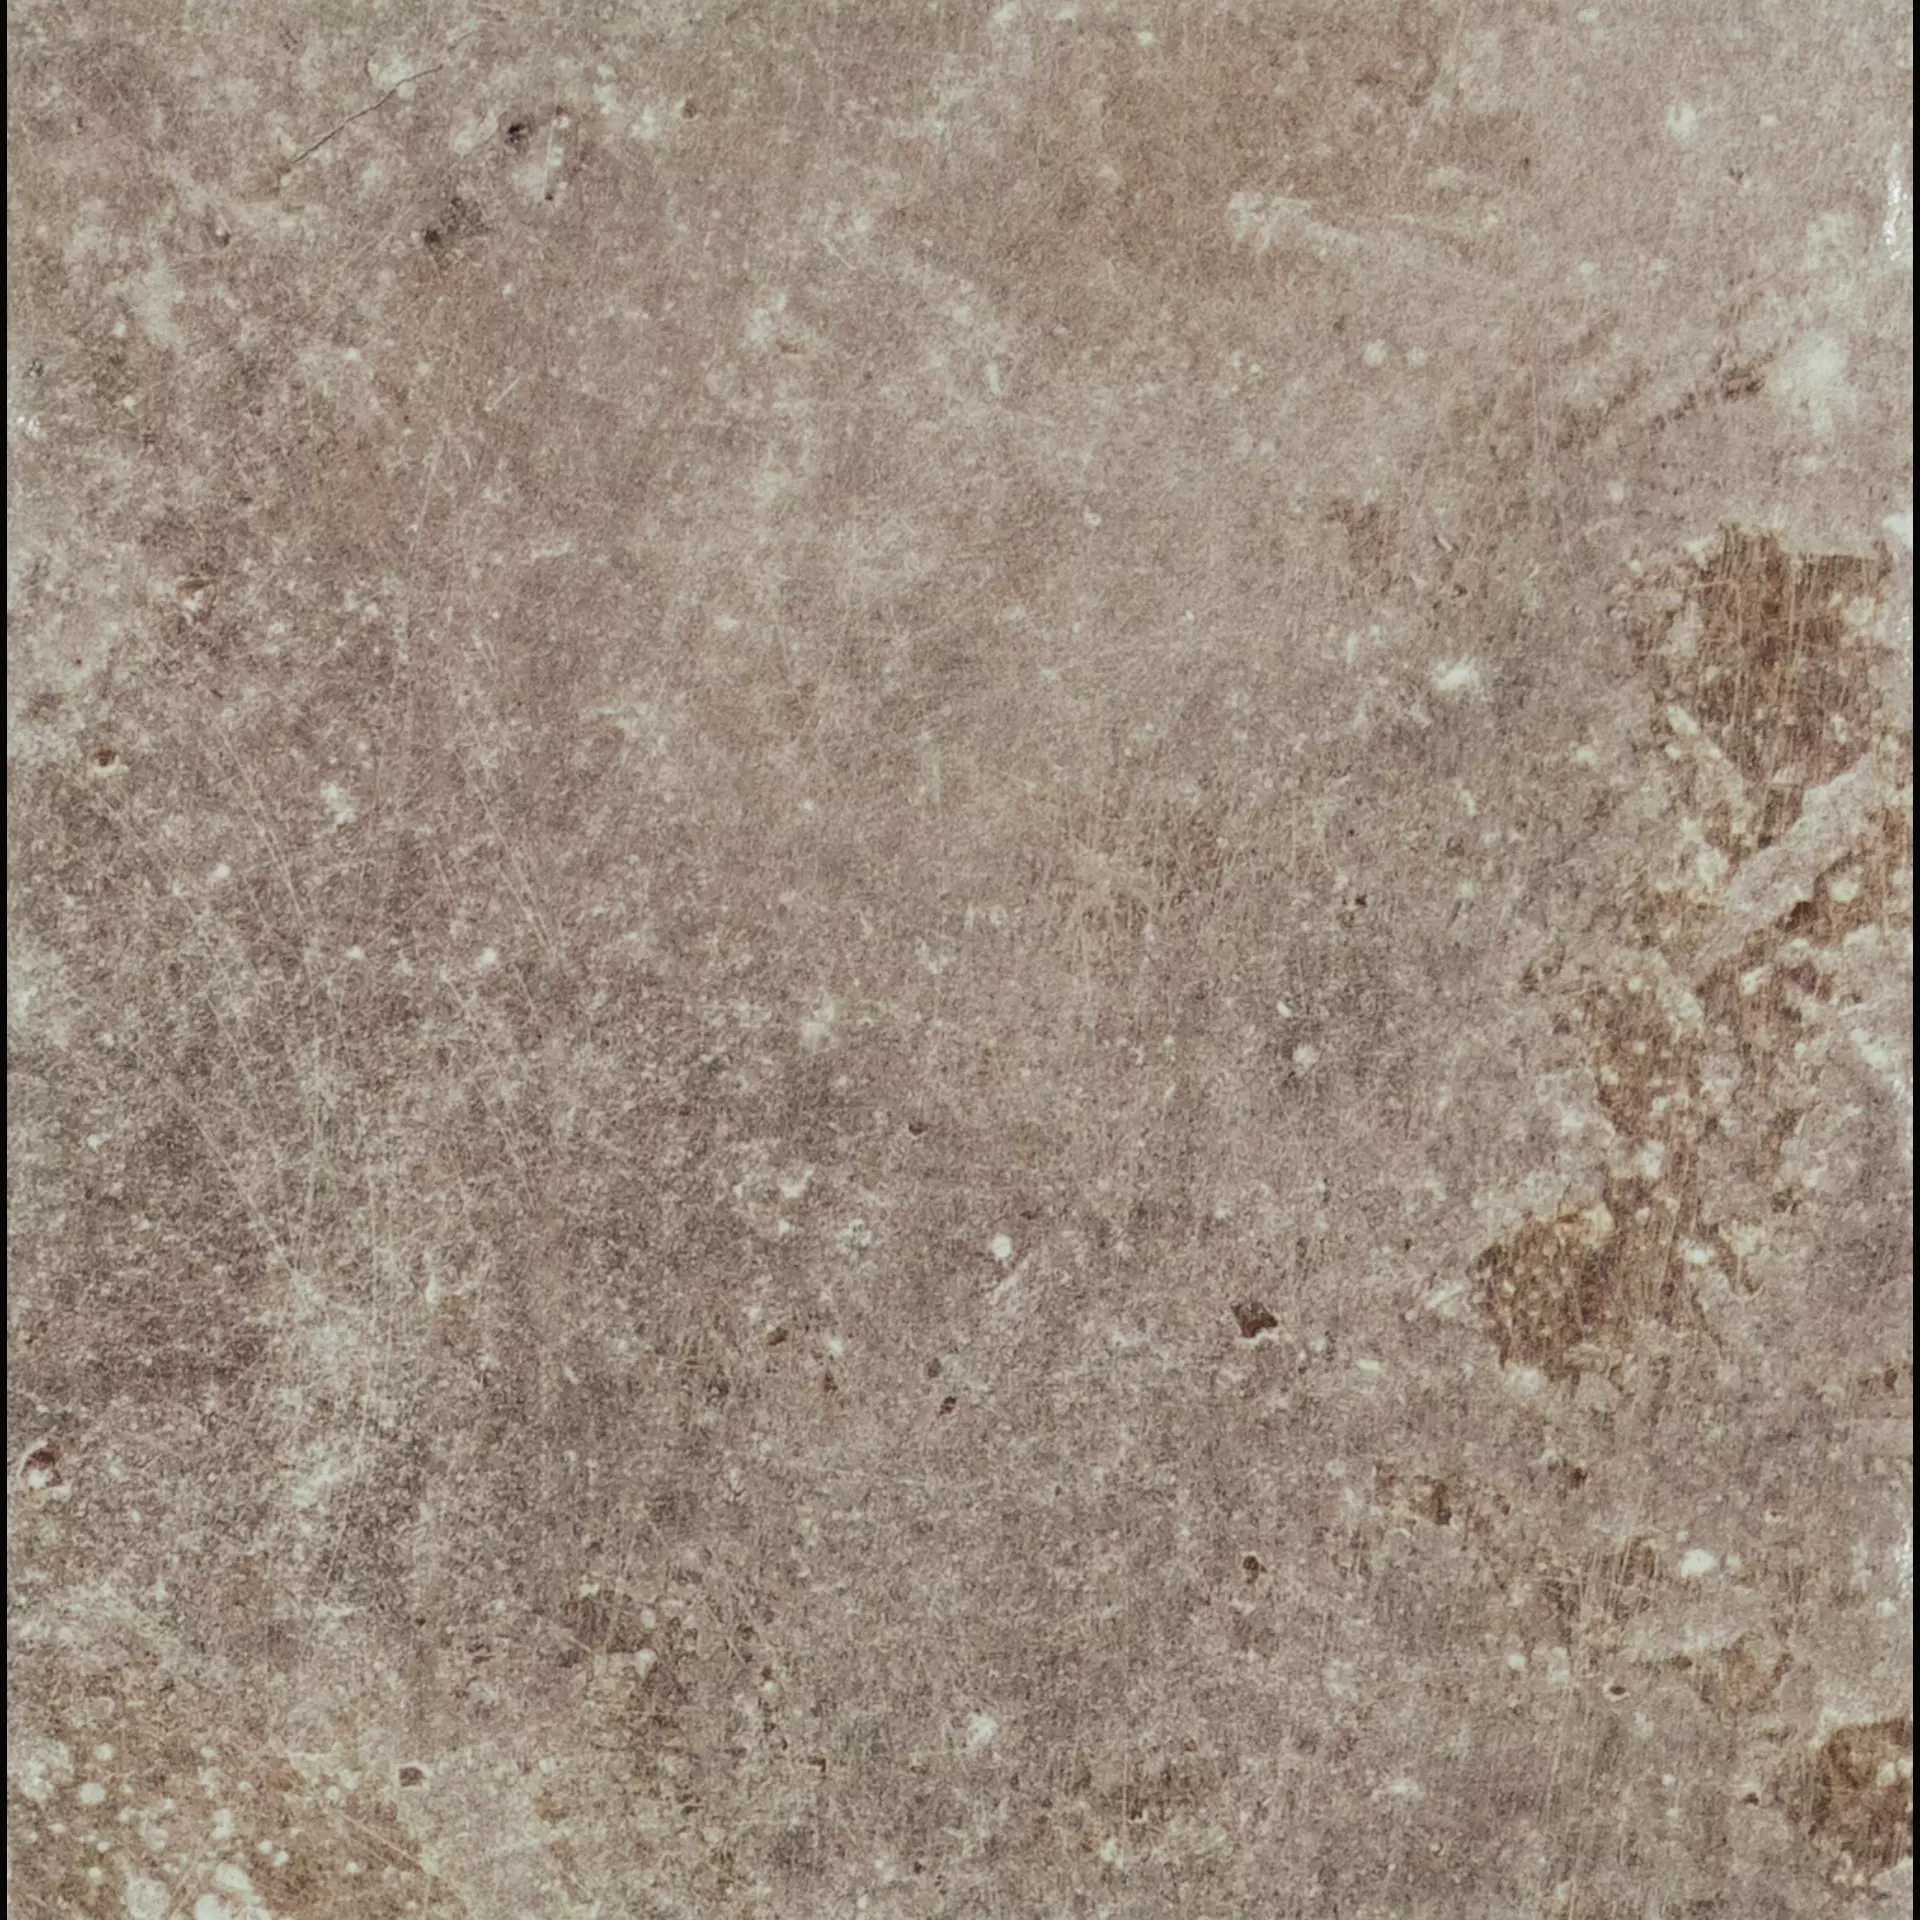 CIR Molo Audace Terra D’Ormeggio Naturale 1067973 20x20cm 10mm